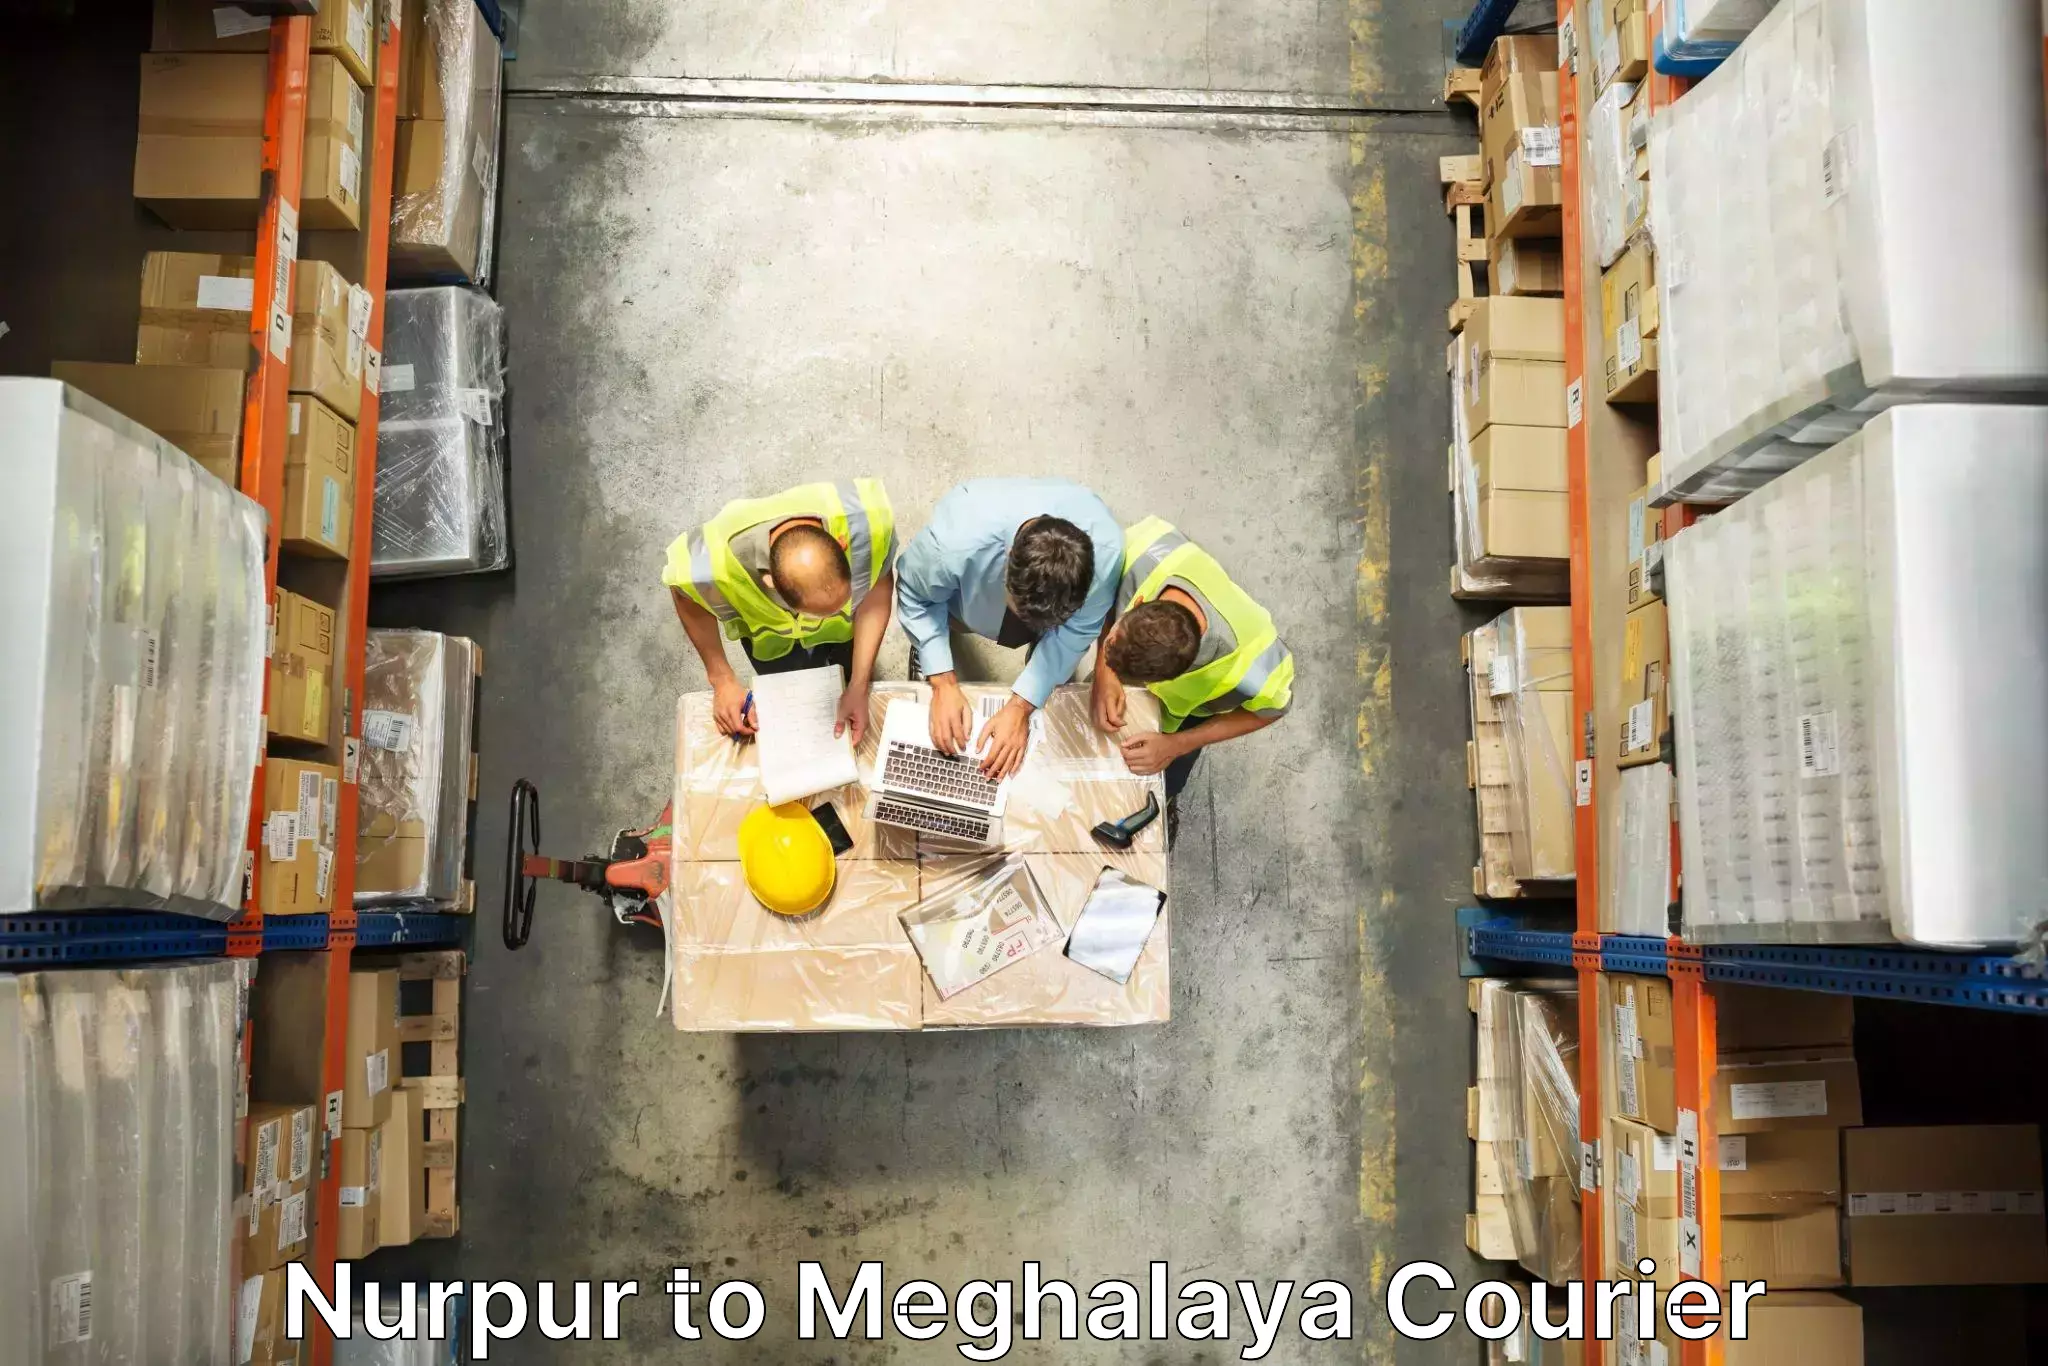 Furniture delivery service Nurpur to Meghalaya